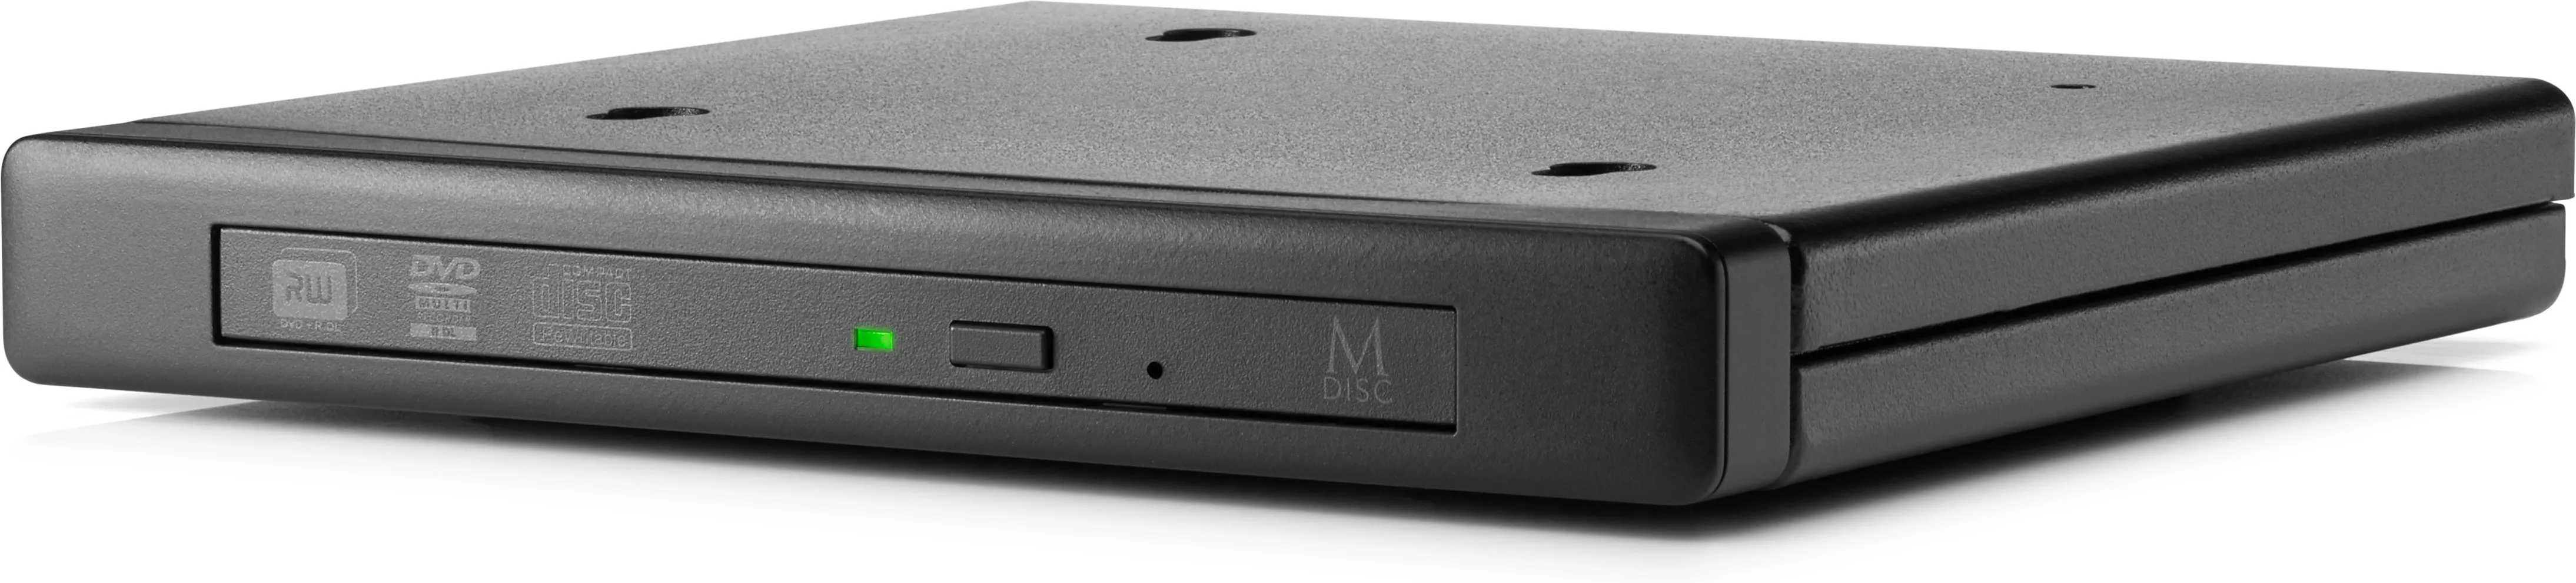 Achat HP Desktop Mini DVD-Writer ODD Module au meilleur prix